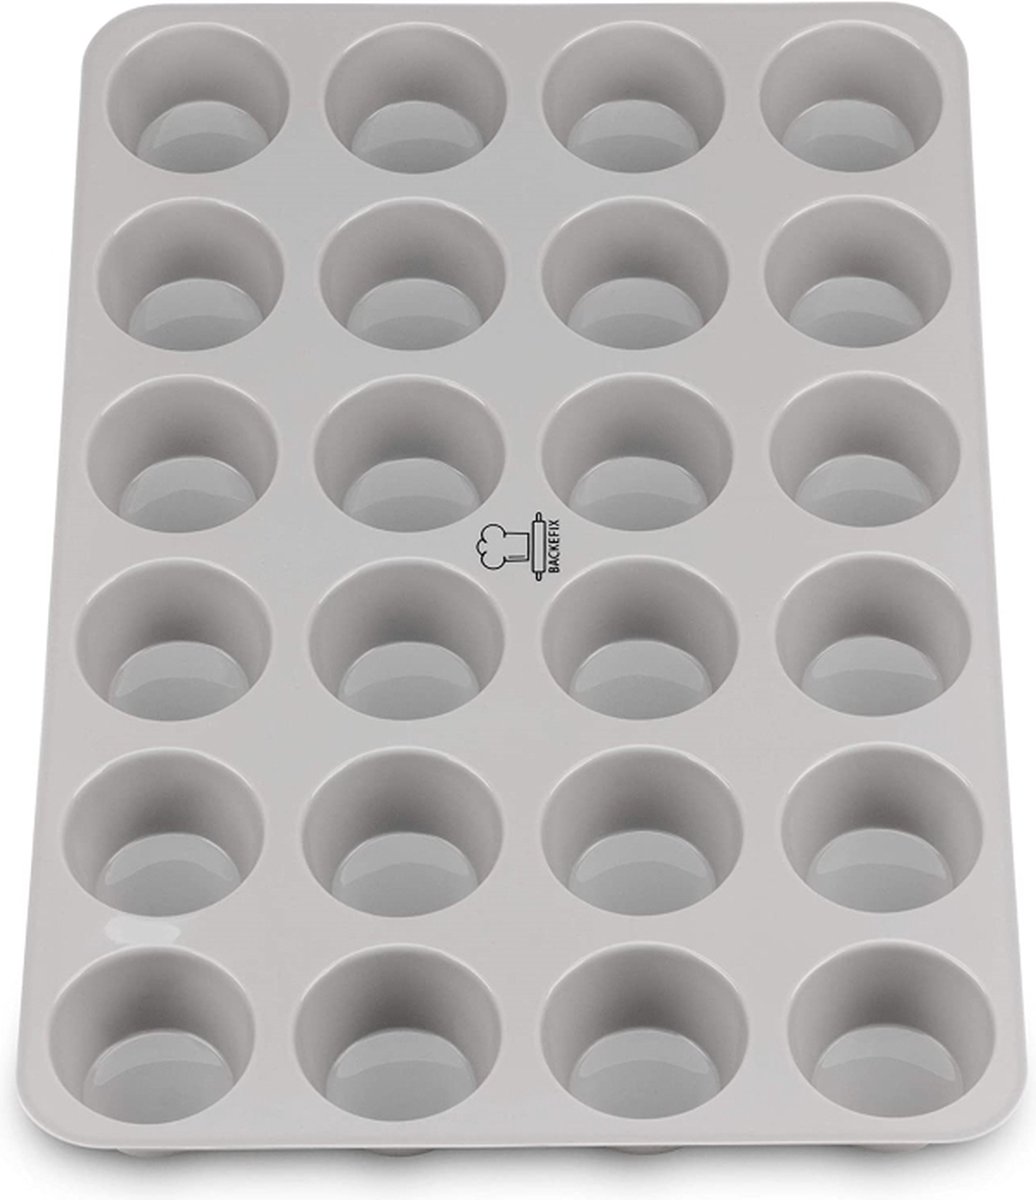 Backefix FLEXI Mini-muffinvorm, silicone, klein met 24 bakvormen van elk 4,5 x 3,5 cm en 3 cm hoog, anti-aanbaklaag, siliconen bakvorm, 24 stuks muffinvorm, BPA-vrij, vaatwasmachinebestendig